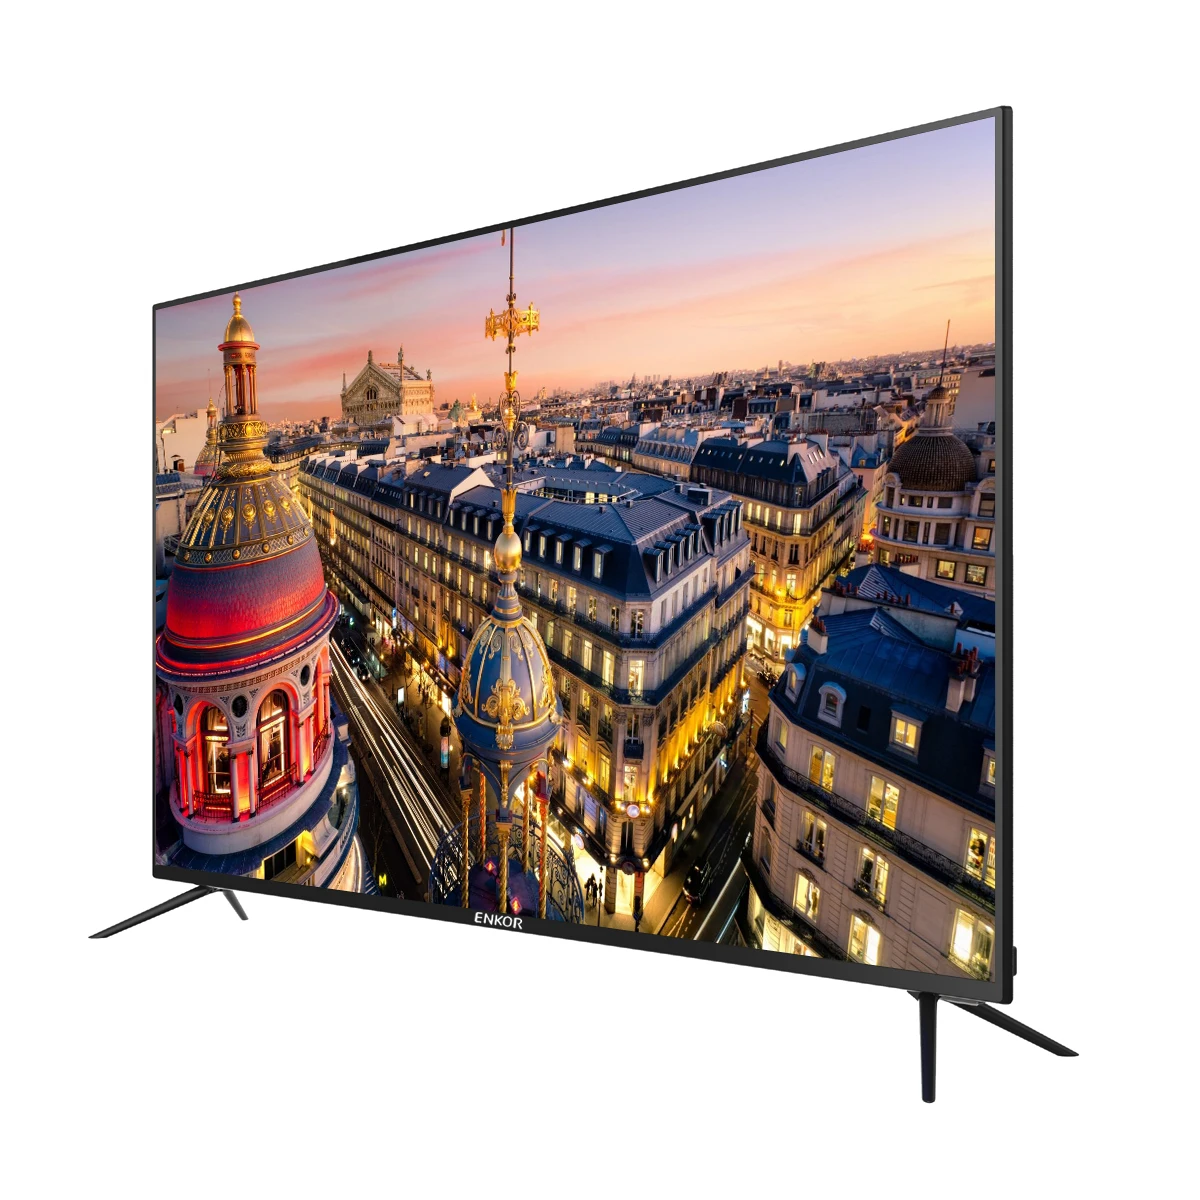 Goedkope Led 42 Inch Elektron Hd 1080p 4k Flat Screen Smart 32 Prijs - Buy Smart Tv 50 Inch 4 K,Beste Hd Led Smart Tv 32 Inch Led Tv,Led